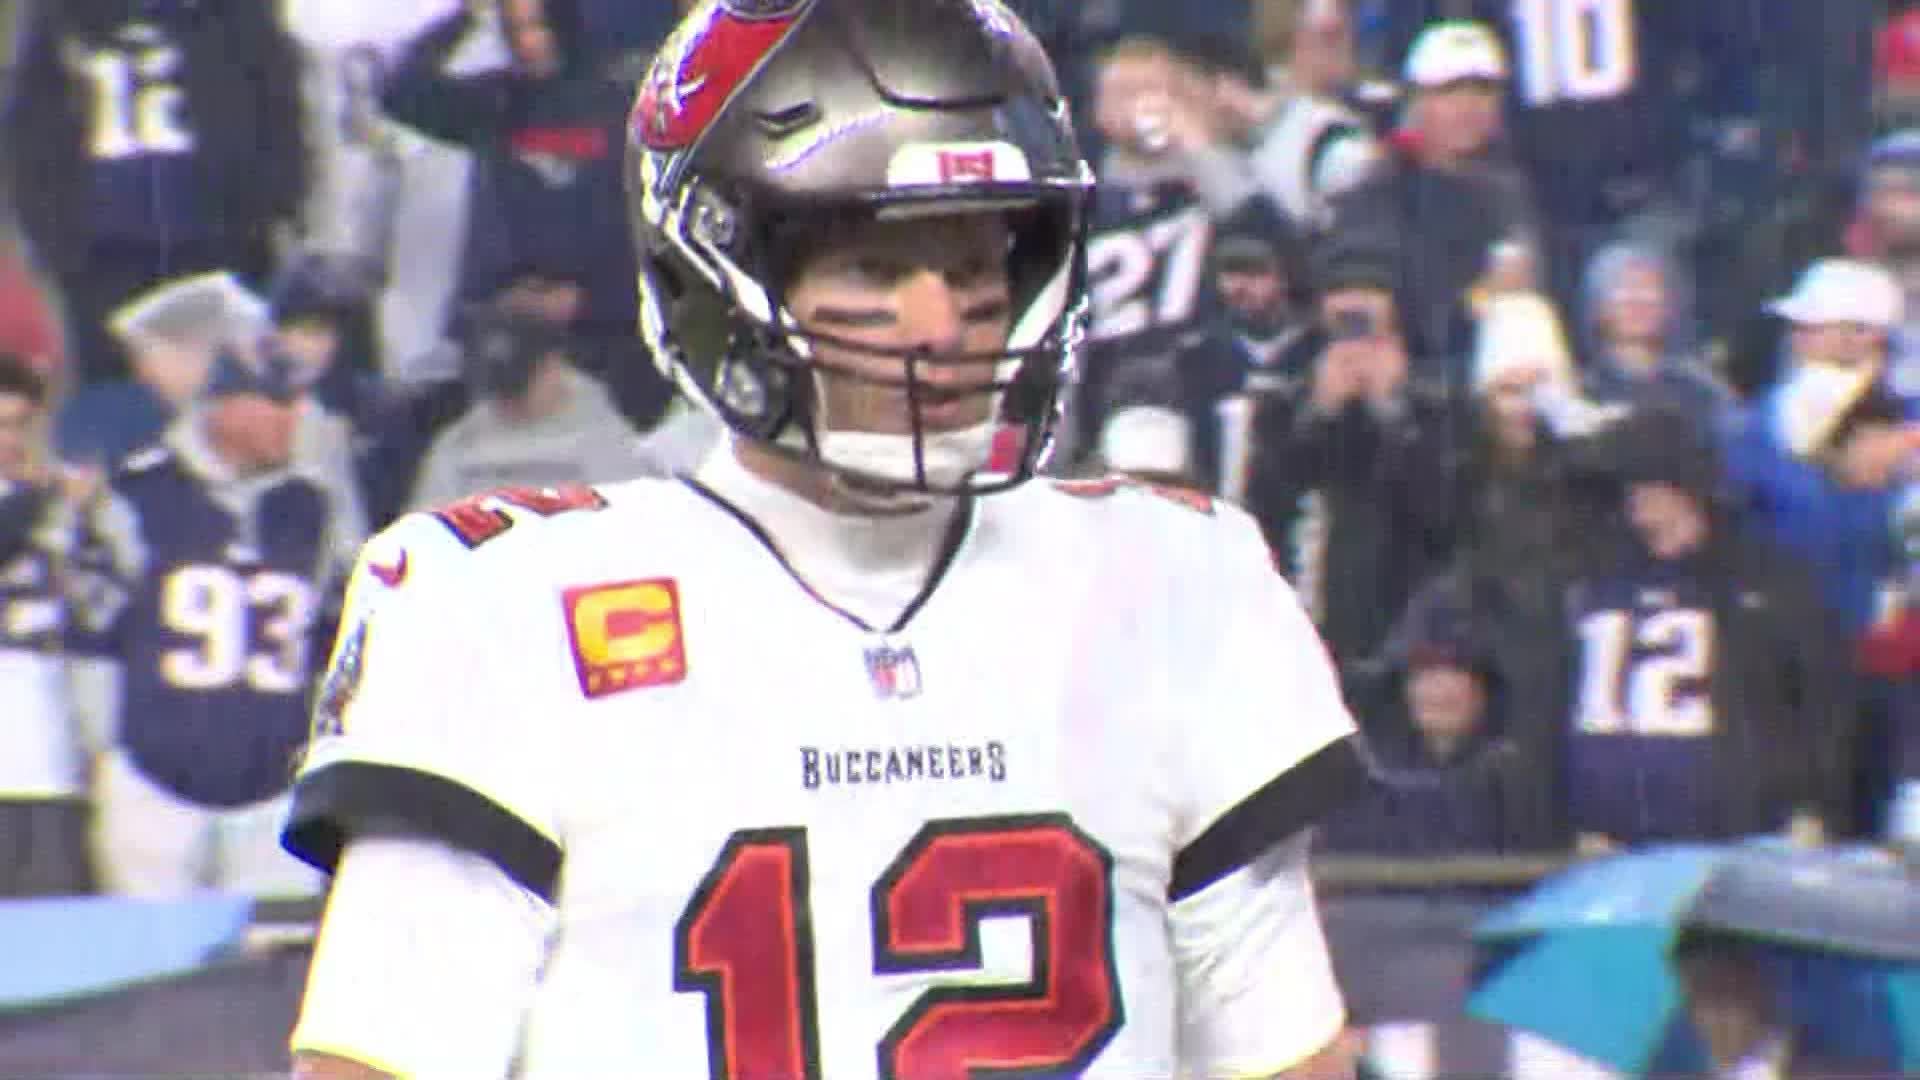 Patriots fans gave Tom Brady ovation as he made pregame entrance